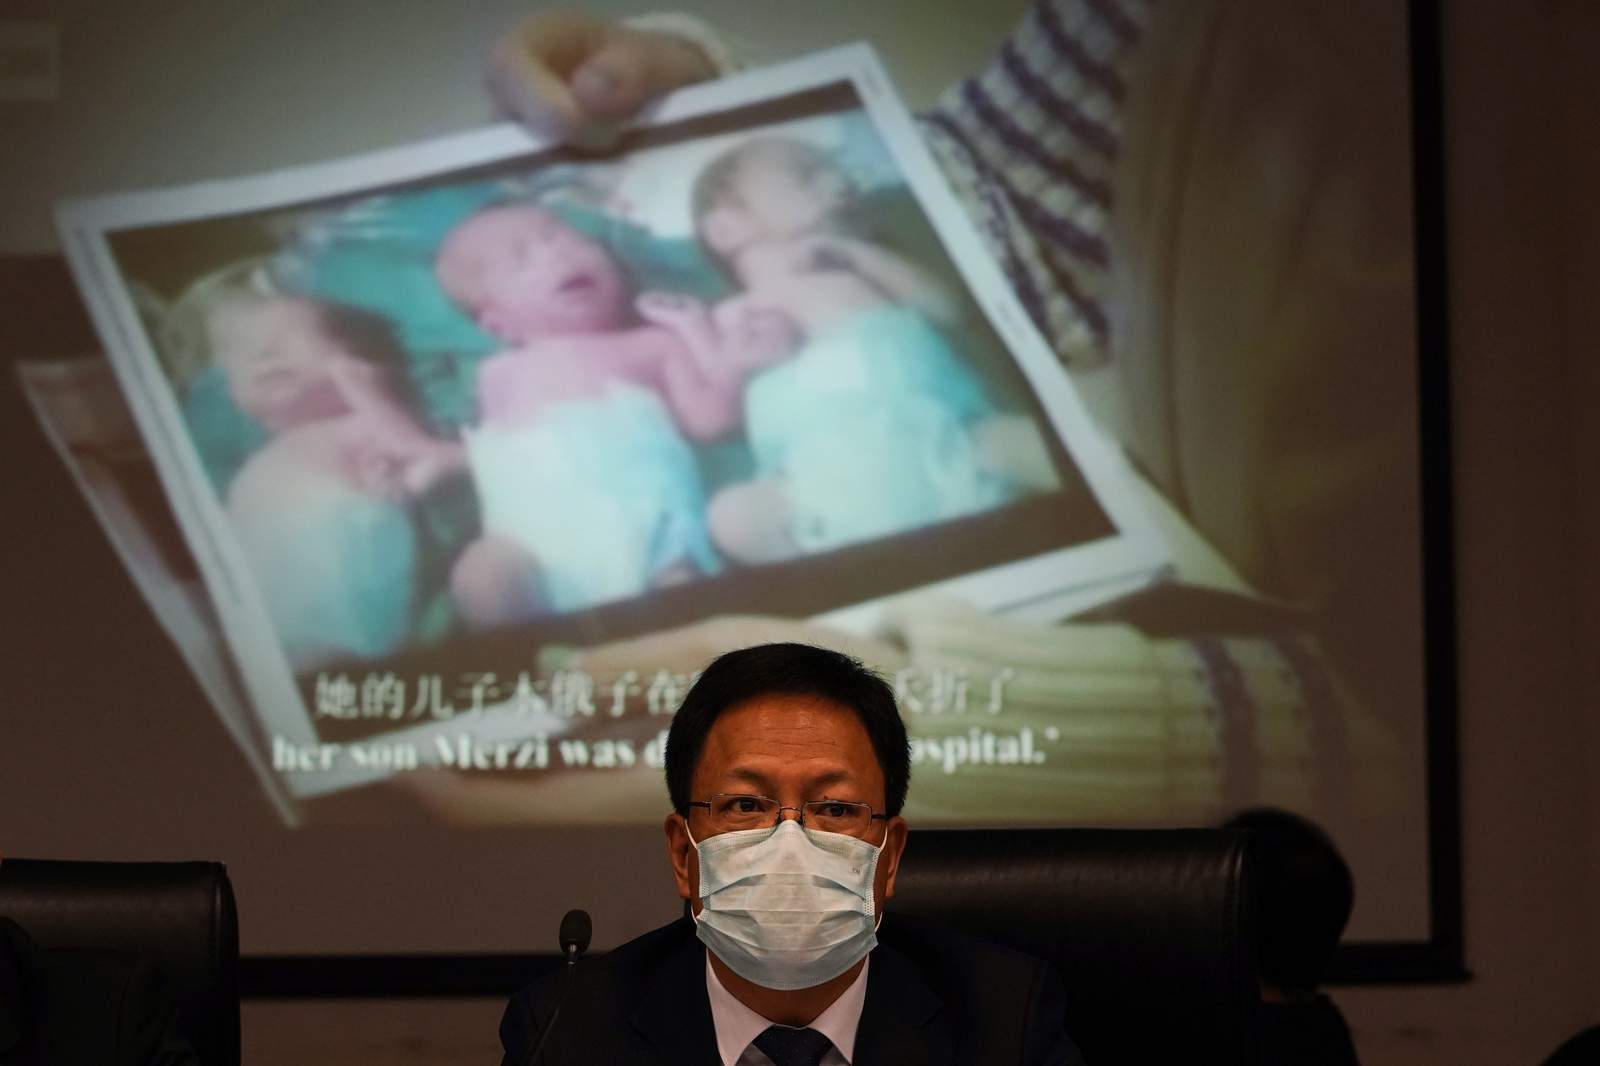 China denies coercive birth control measures in Xinjiang